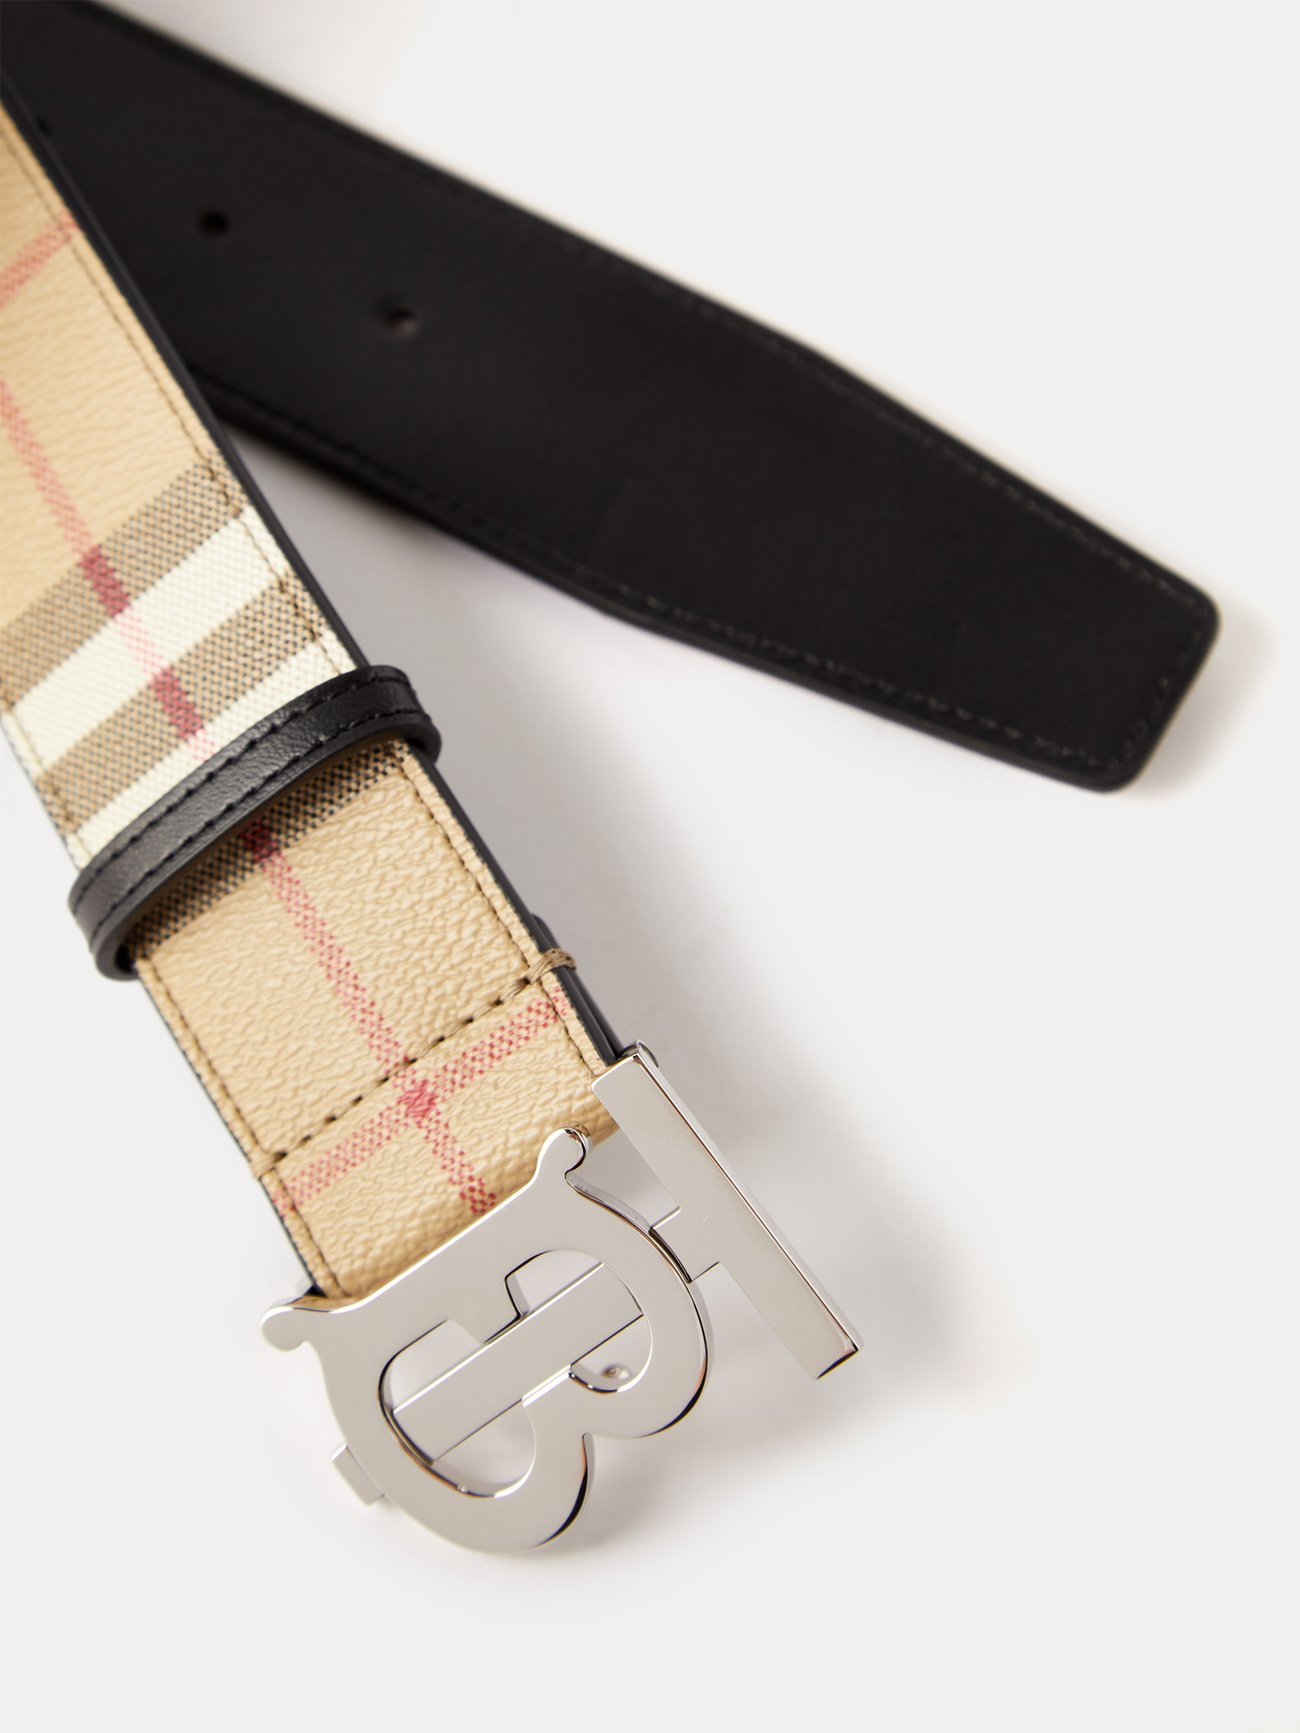 Burberry Monogram-buckle Check Leather Belt - Beige Multi - ShopStyle